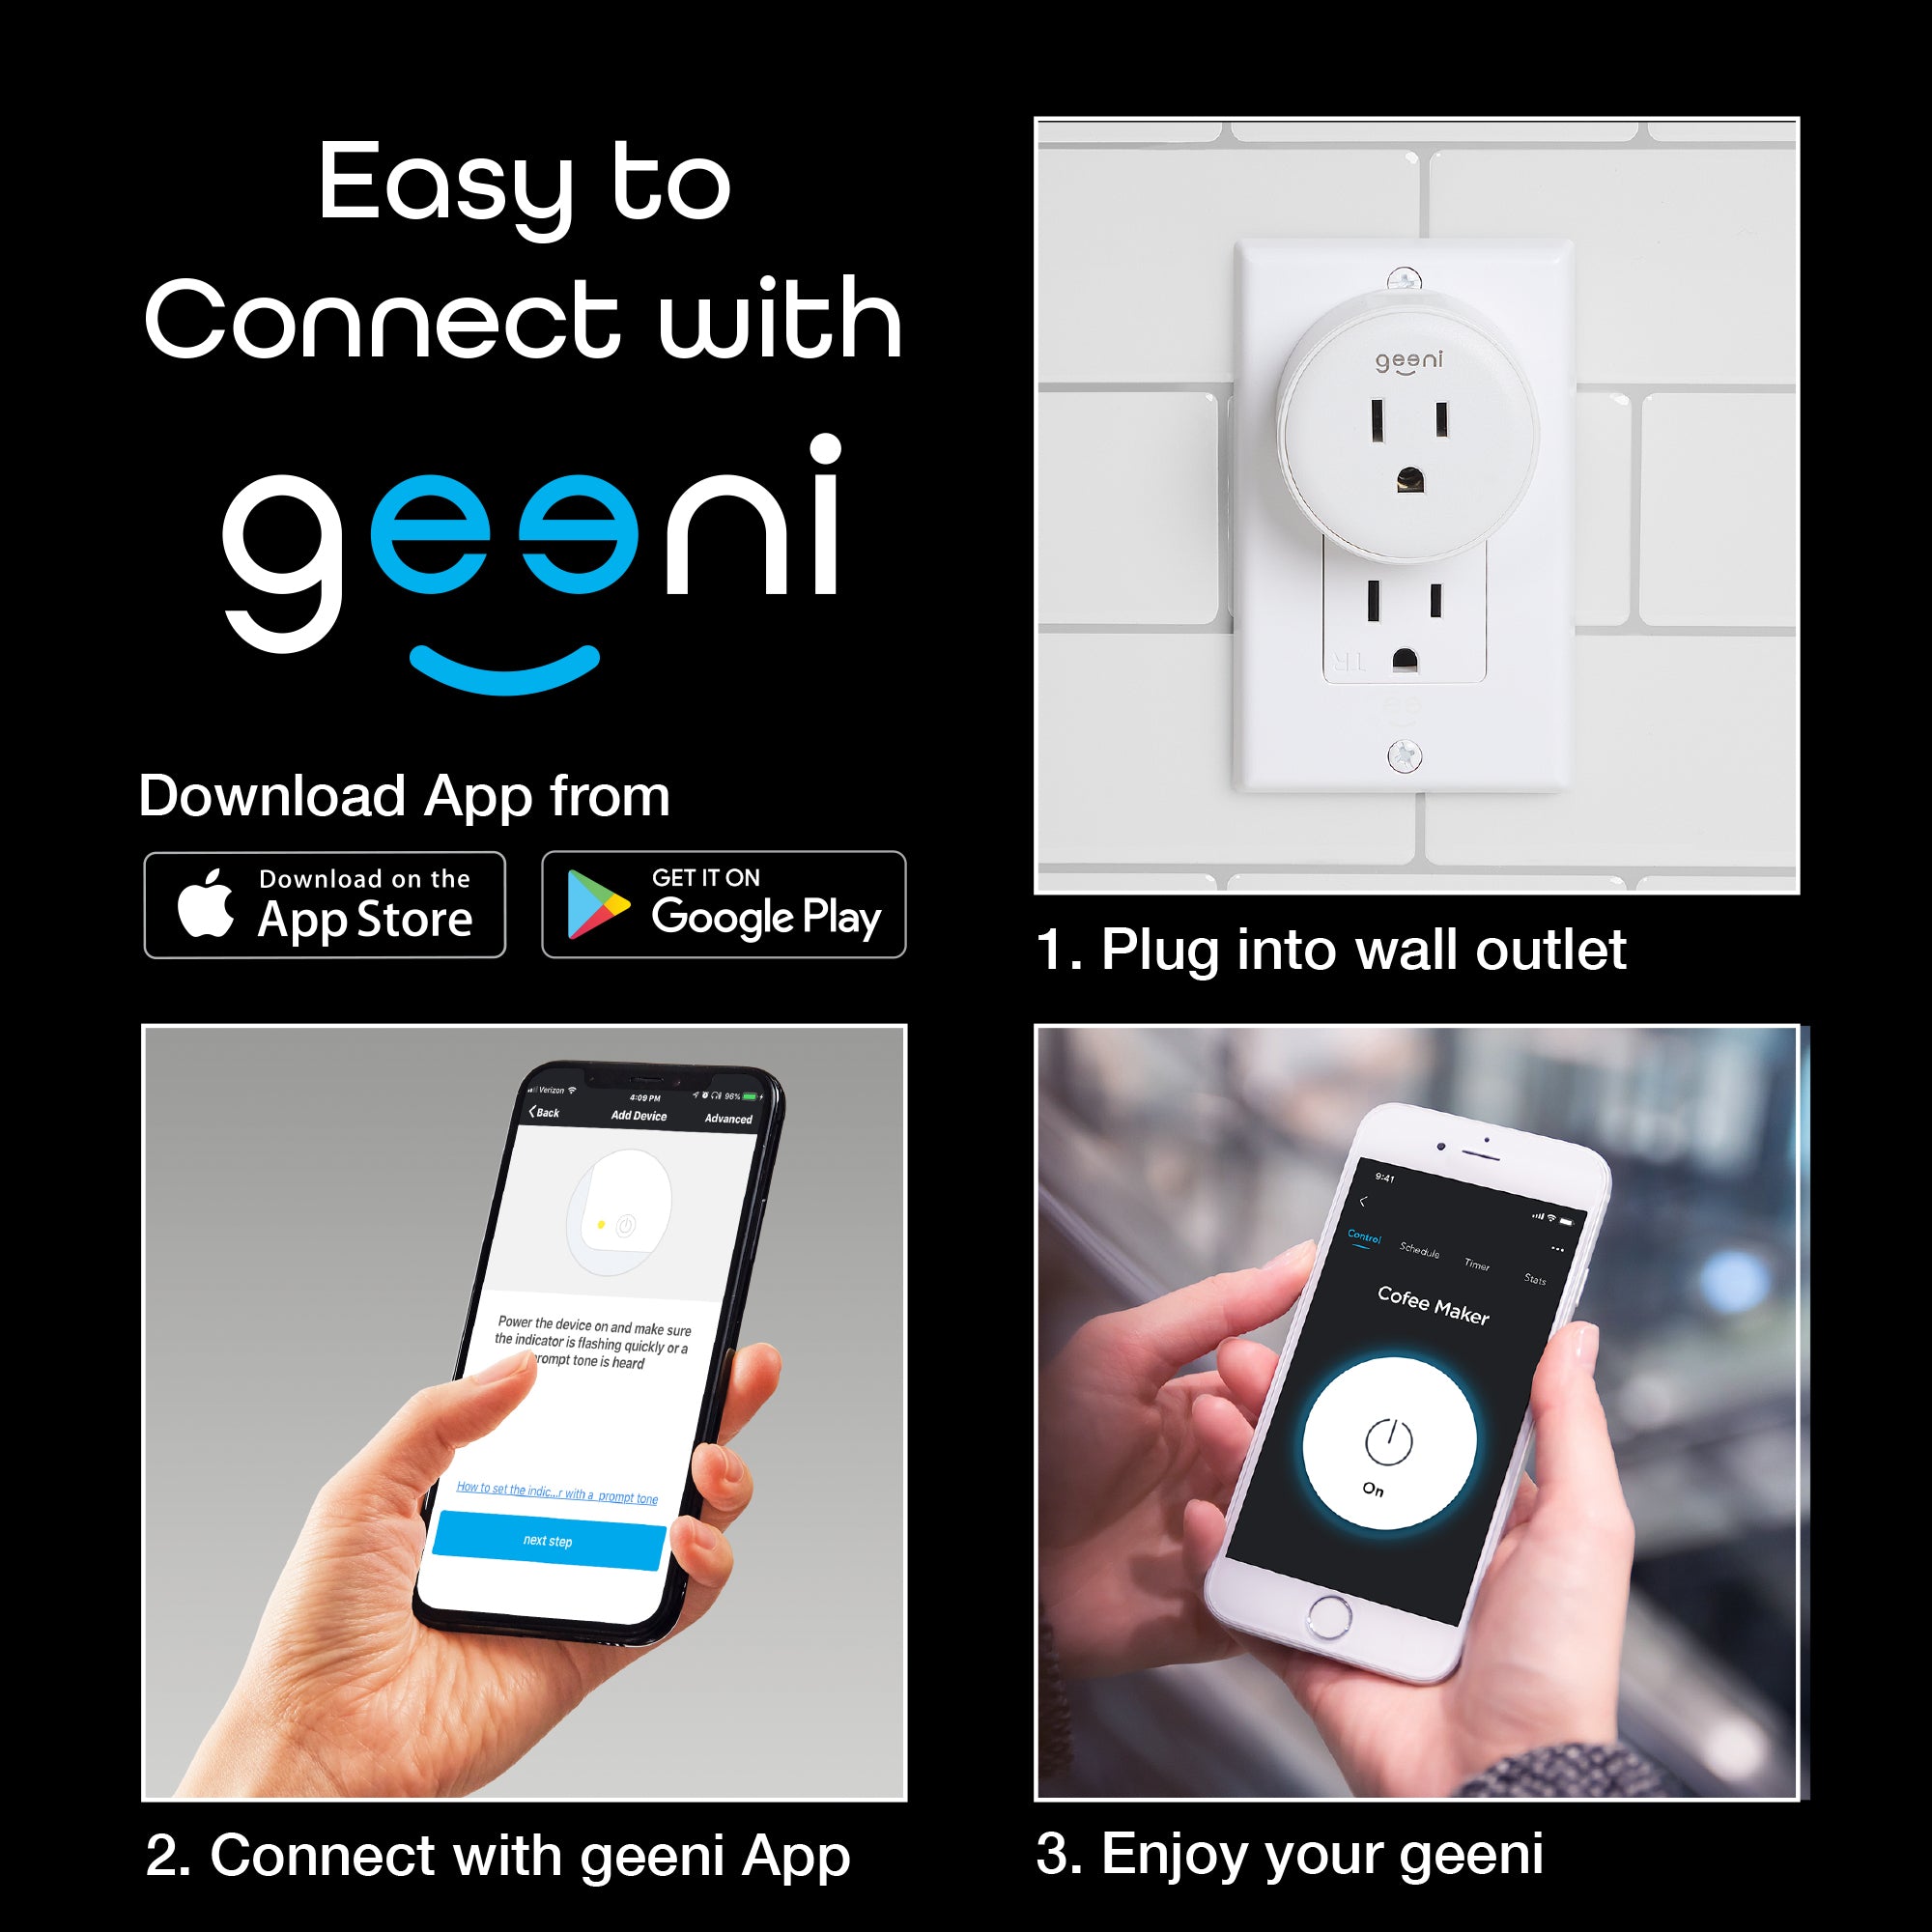 Geeni Dot Smart Plug (2-Pack)